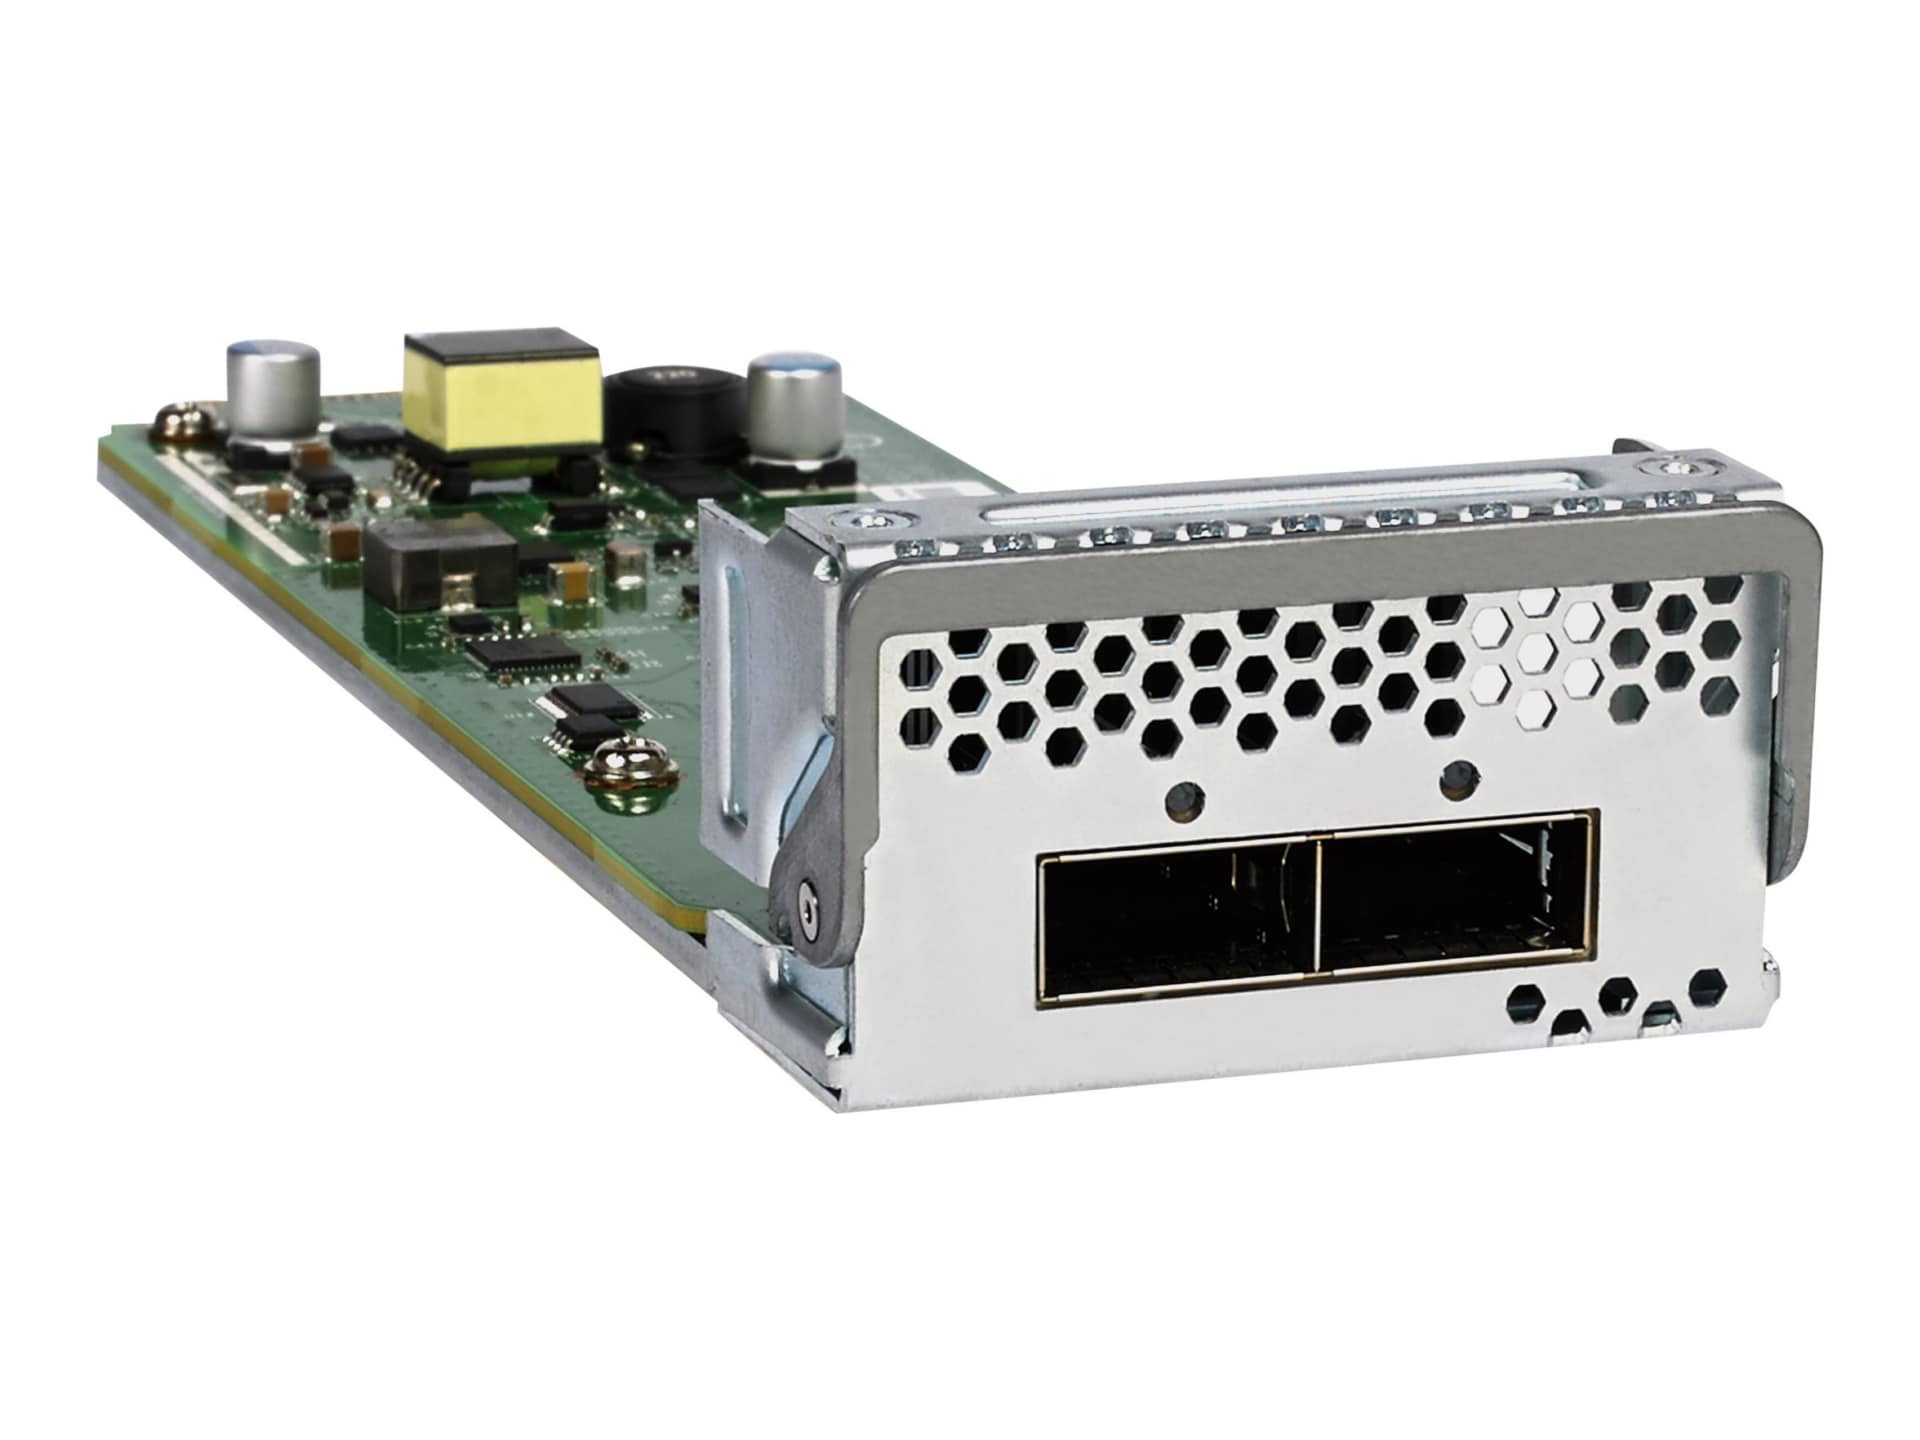 NETGEAR 2 x 40GBASE-X QSFP+ Port Card for M4300-96X (APM402XL)